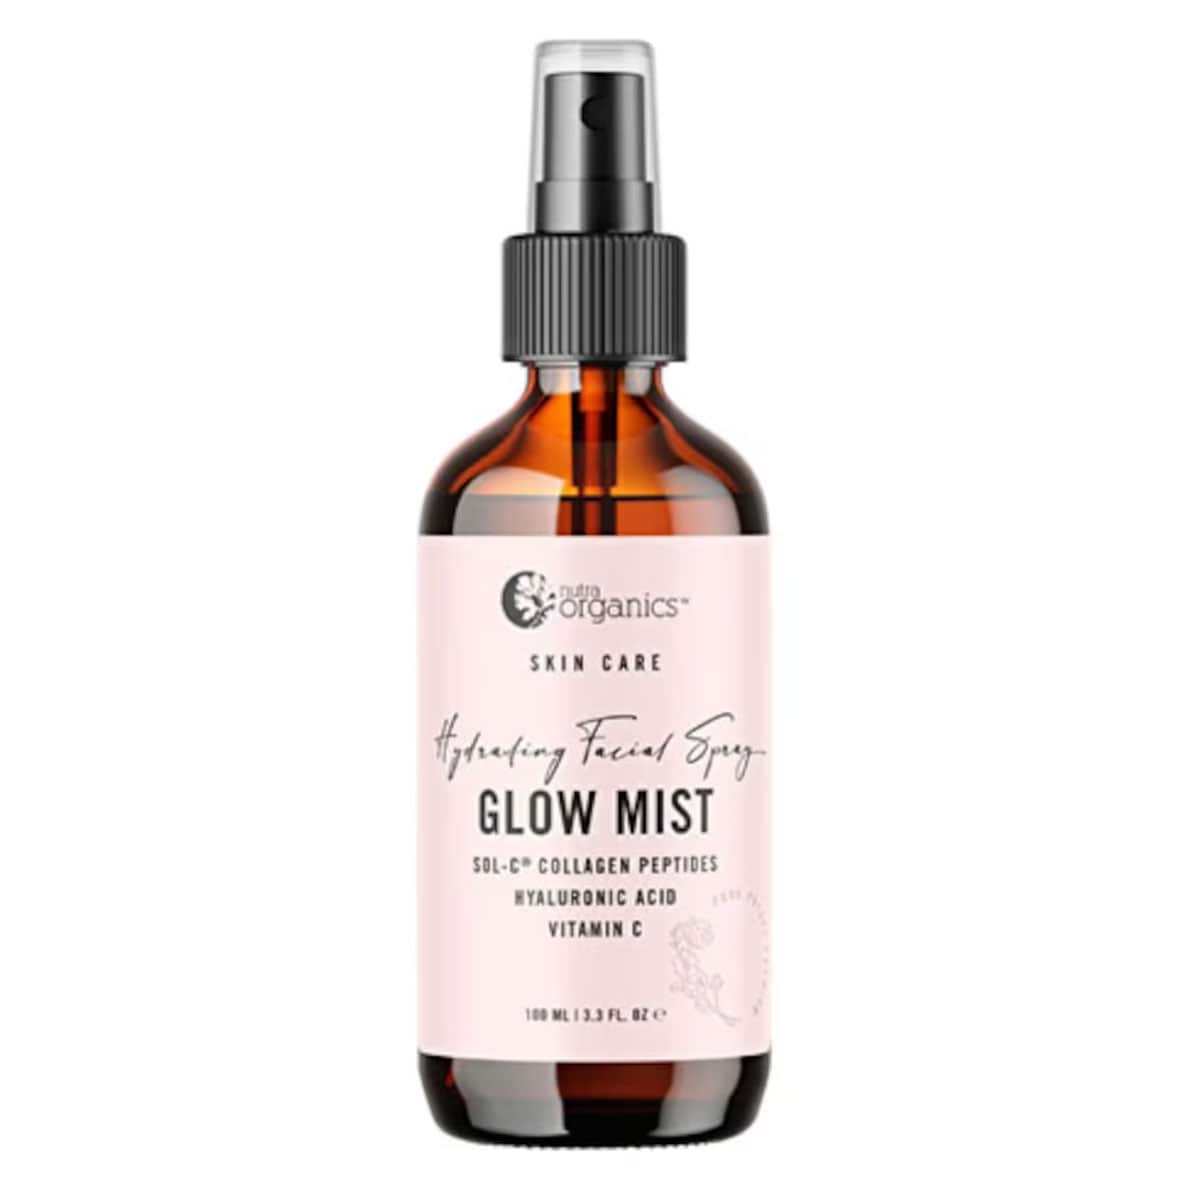 Nutra Organics Skin Care Hydrating Facial Spray Glow Mist 100ml